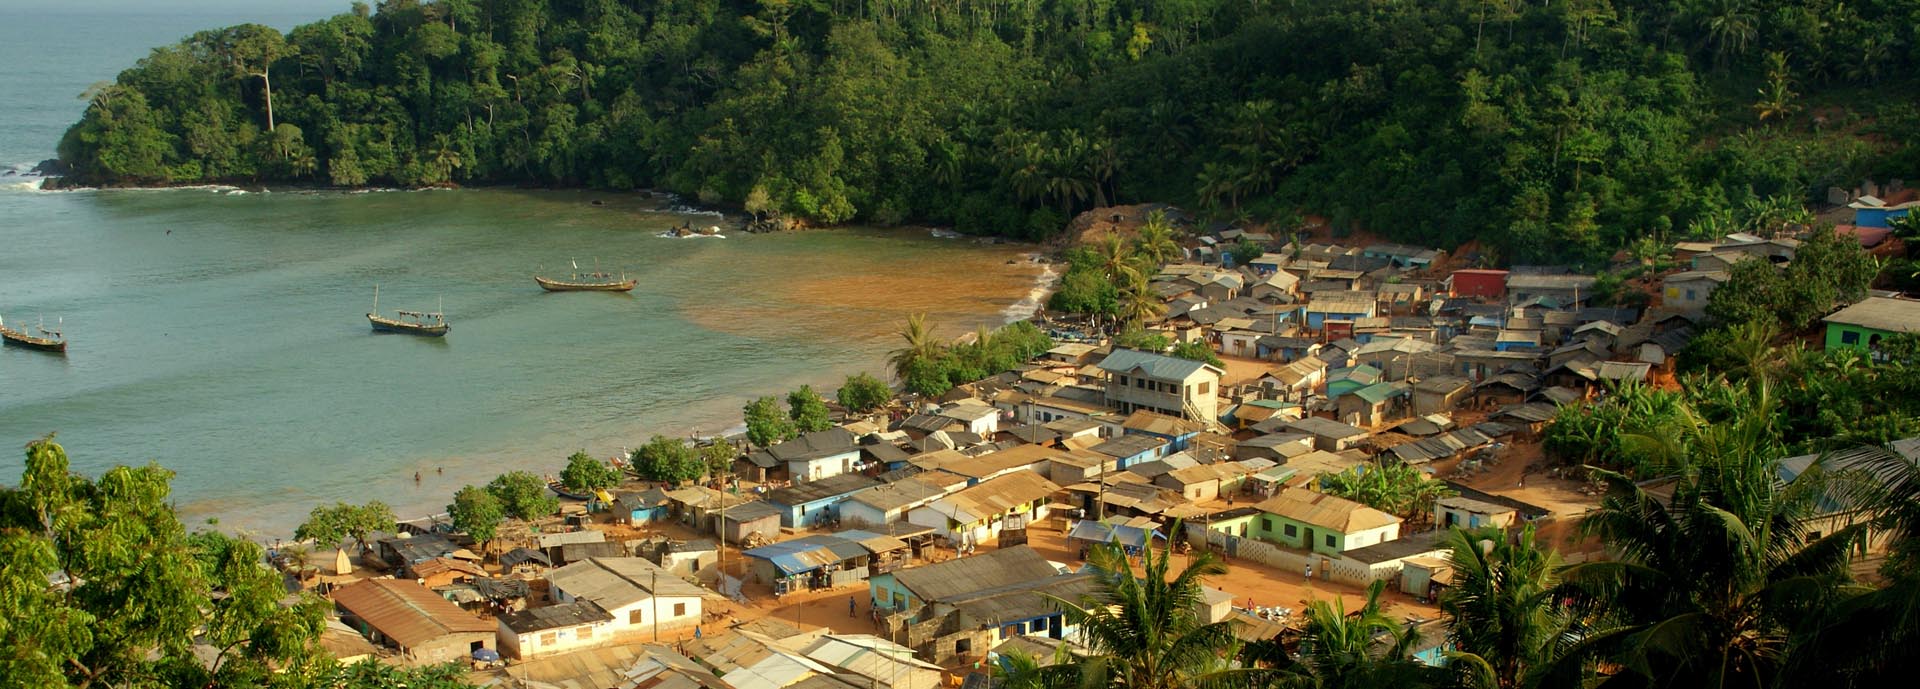 Fishing village in Ghana